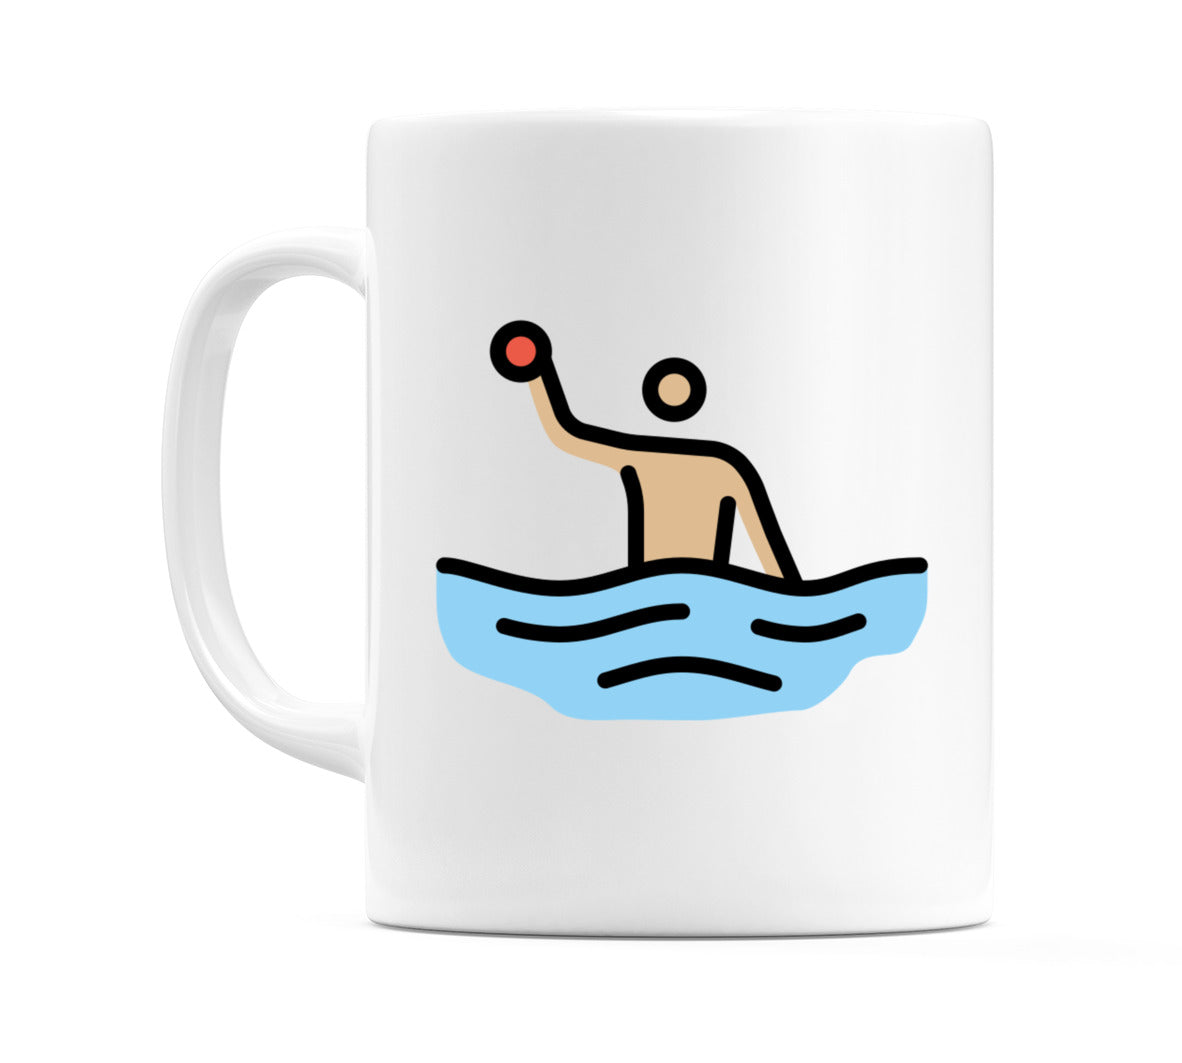 Male Playing Water Polo: Medium-Light Skin Tone Emoji Mug